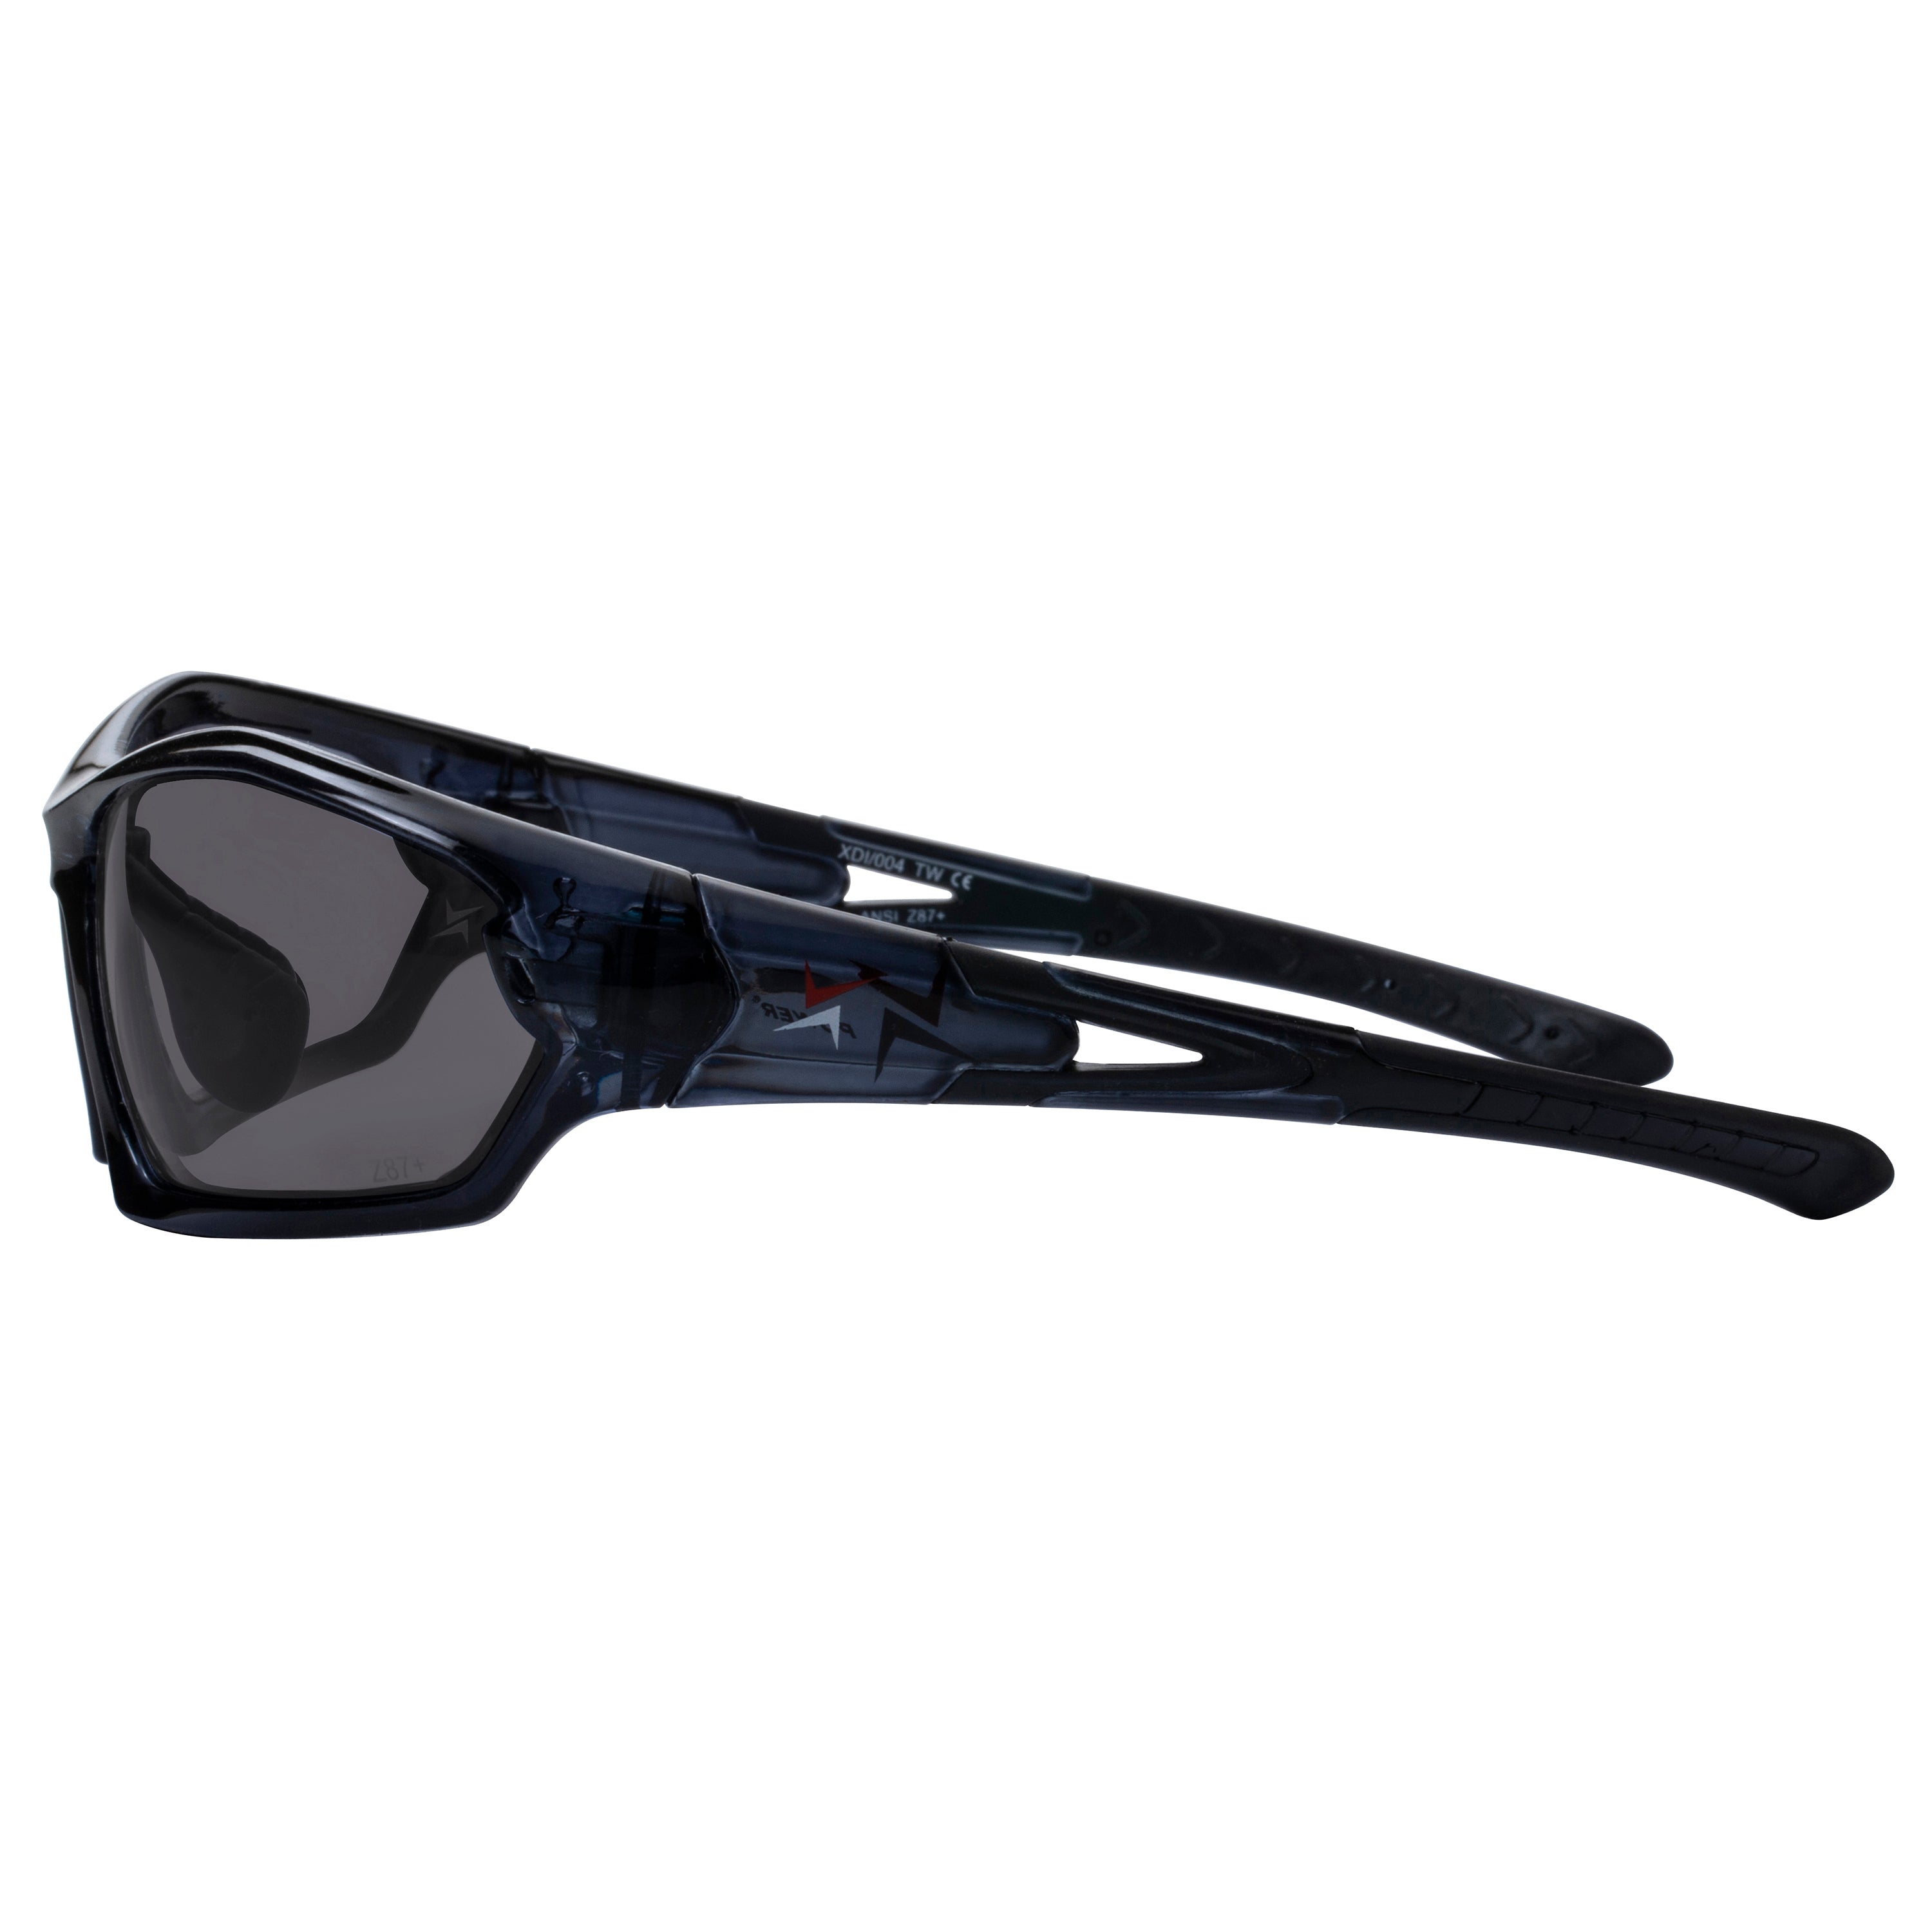 Dark Smoke Lens Translucent Frame Sport Safety Sunglasses with Adjustable Nose Pads.